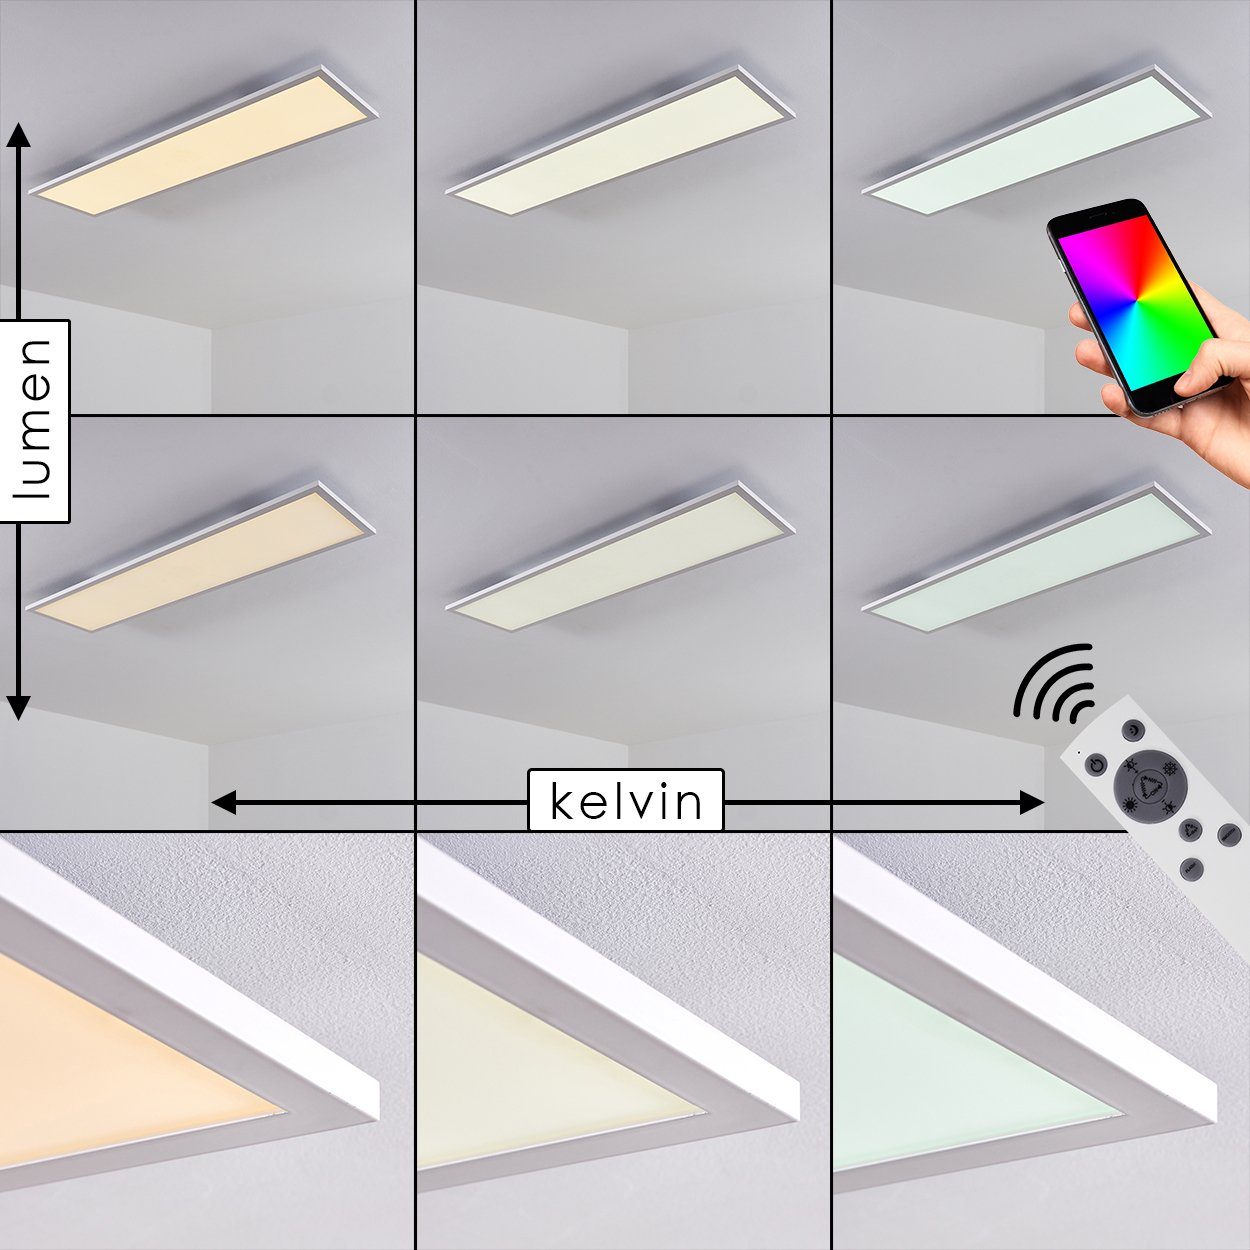 »Vacil« Aluminiumin Smartphone-App, 3000-6000 dimmbare hofstein LED aus CCT o. RGB-Farbwechsel, Kelvin, Panel Panel Sprachsteuerung Weiß, Fernbedienung